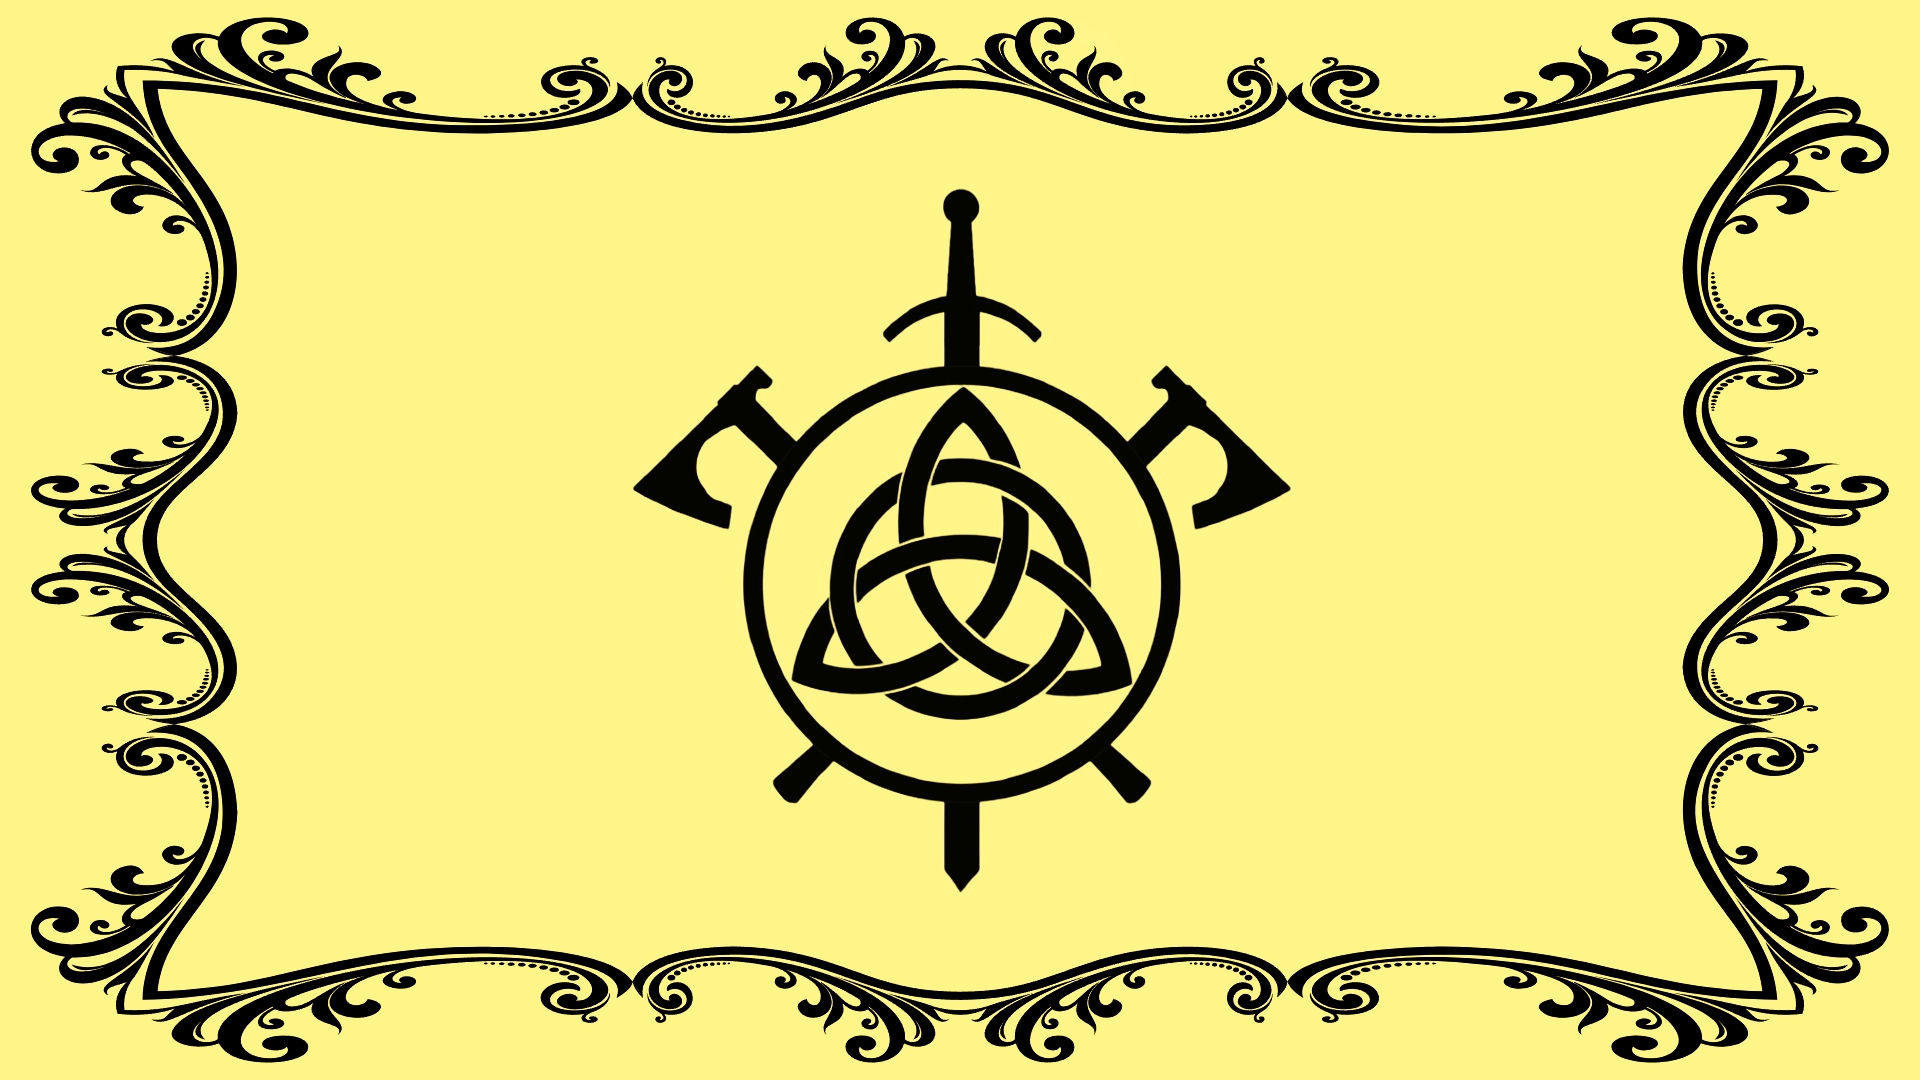 На желтом фоне эмблема рыцарского клуба Бродекс рамка